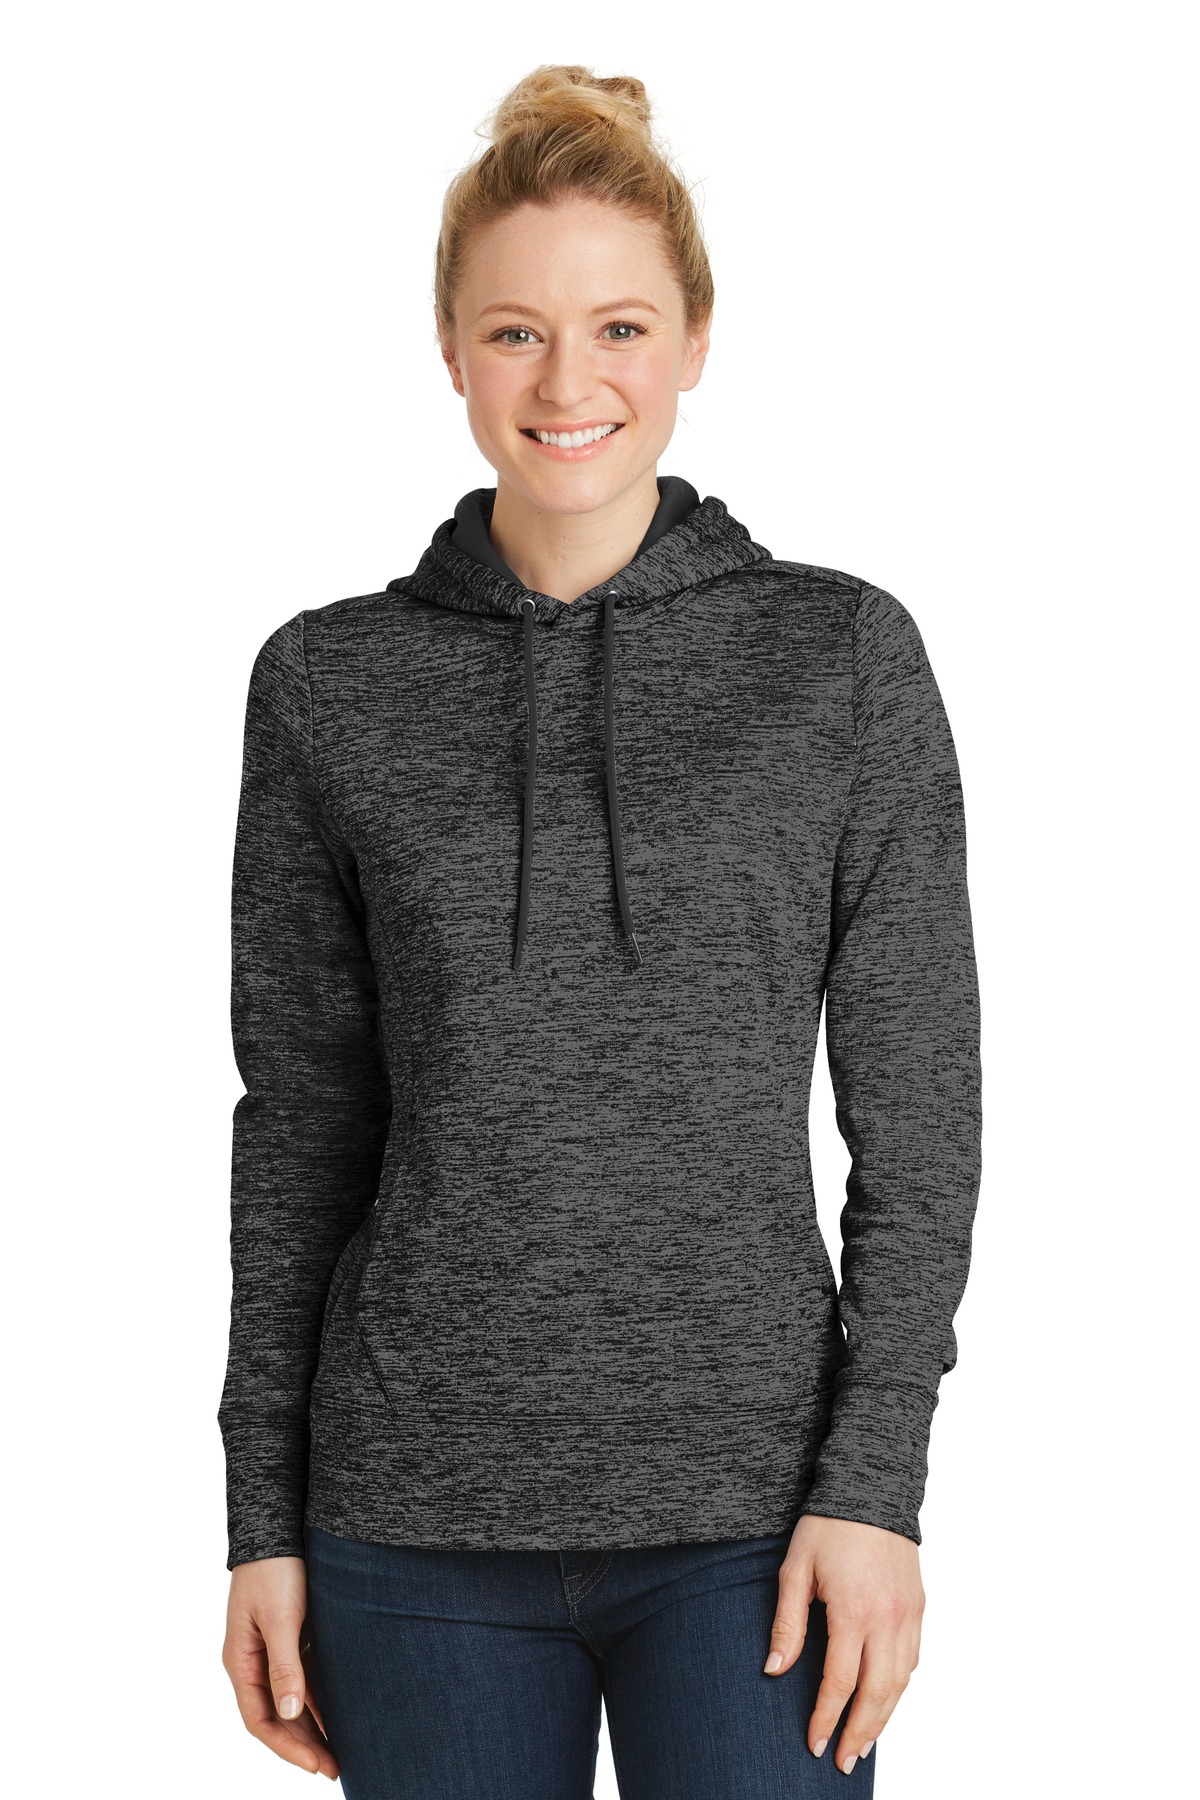 Sport-Tek Ladies Sweatshirts & Fleece for Hospitality ® Ladies PosiCharge® Electric Heather Fleece Hooded Pullover.-Sport-Tek